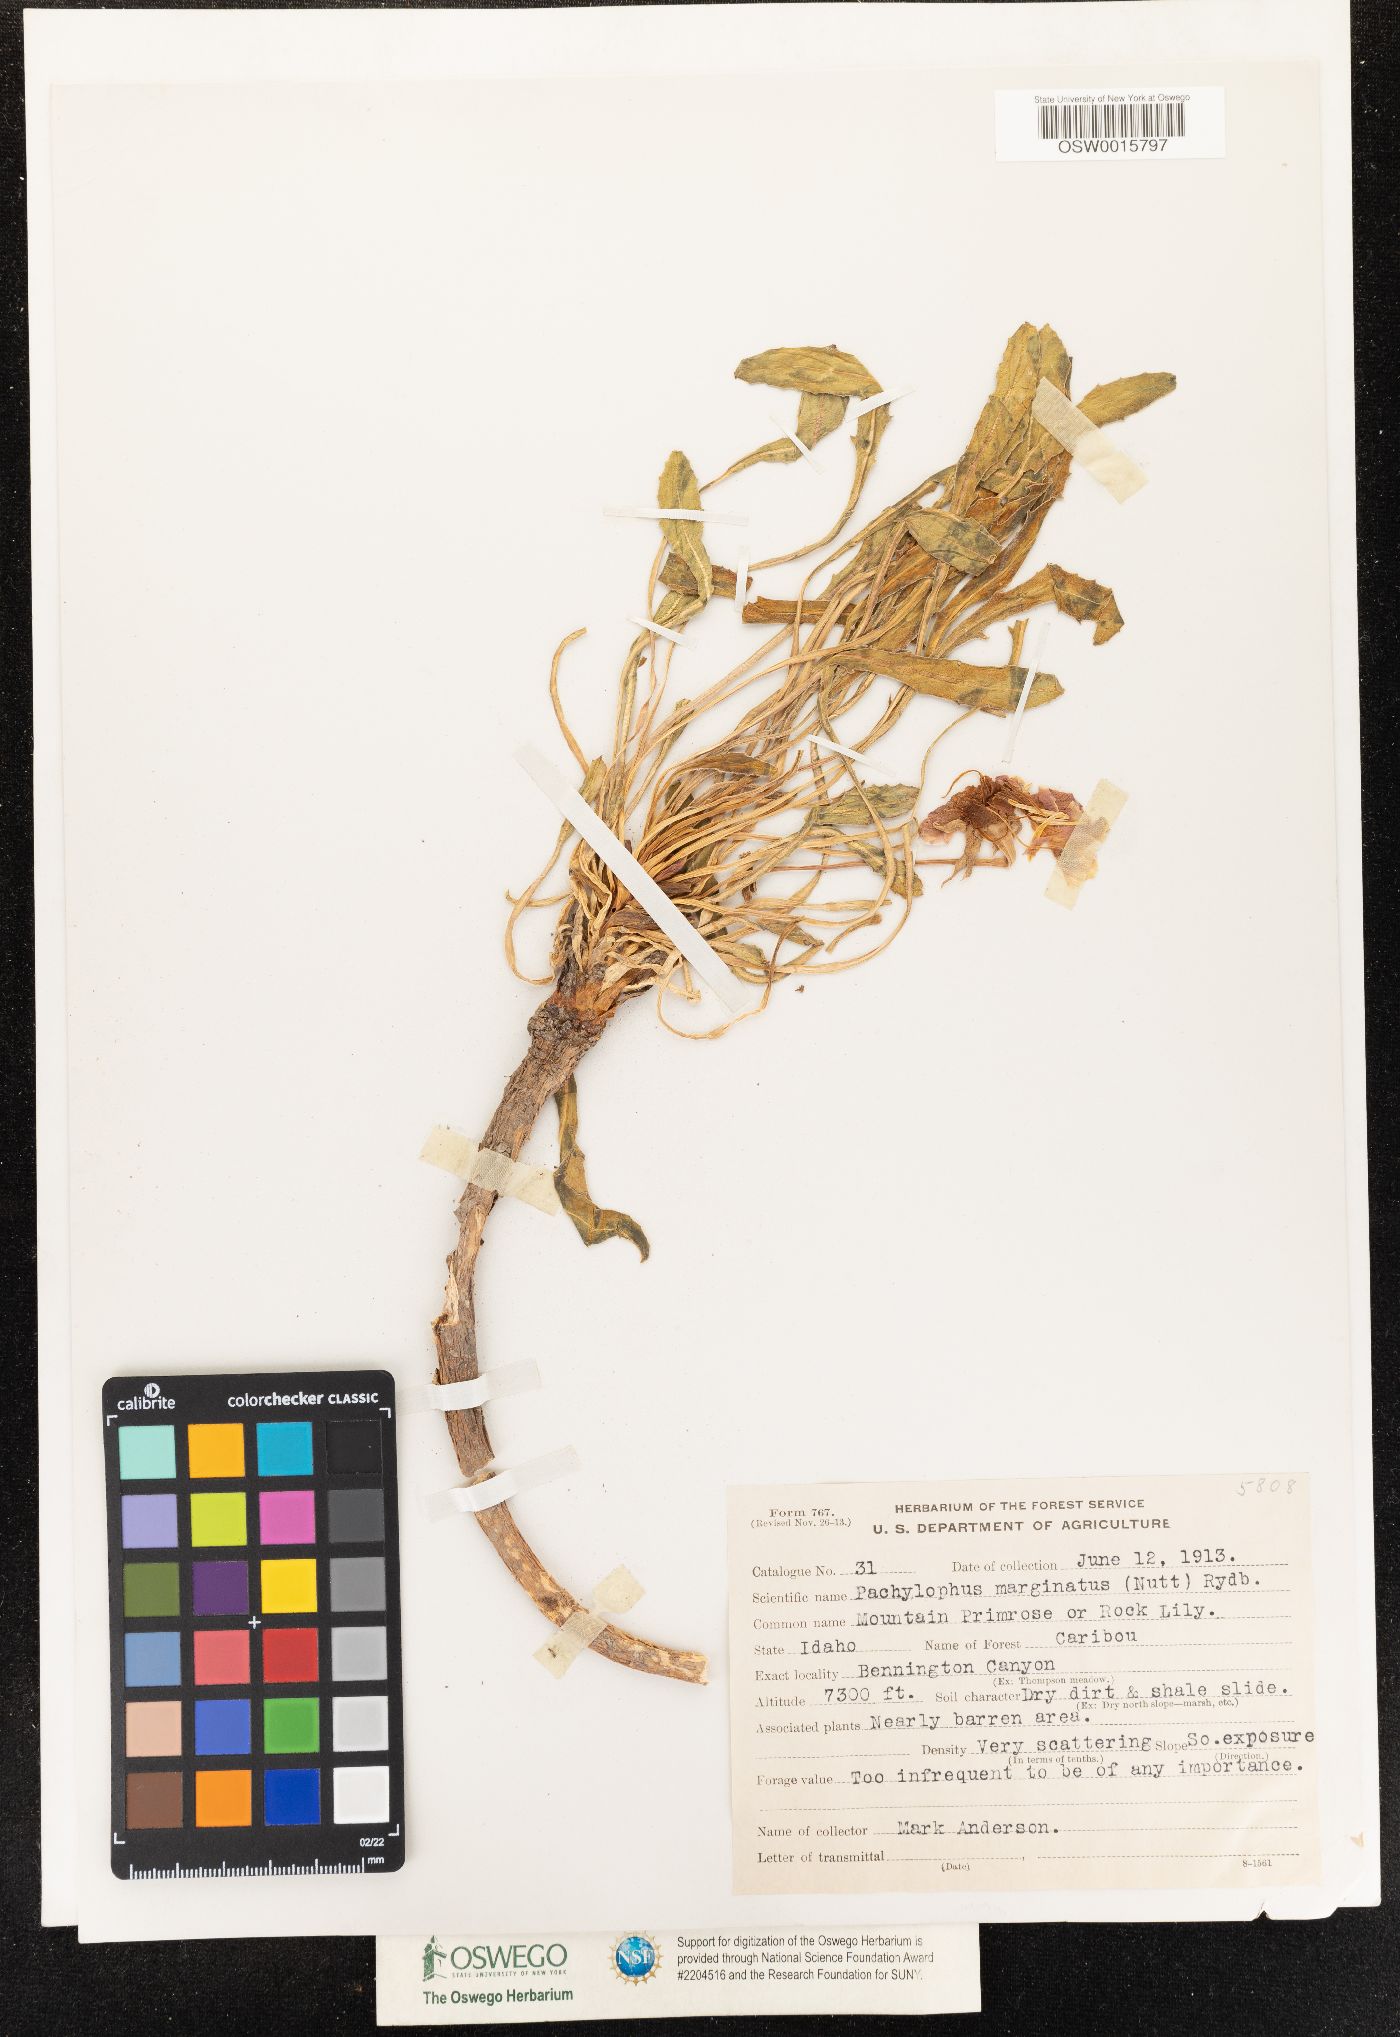 Oenothera caespitosa ssp. marginata image